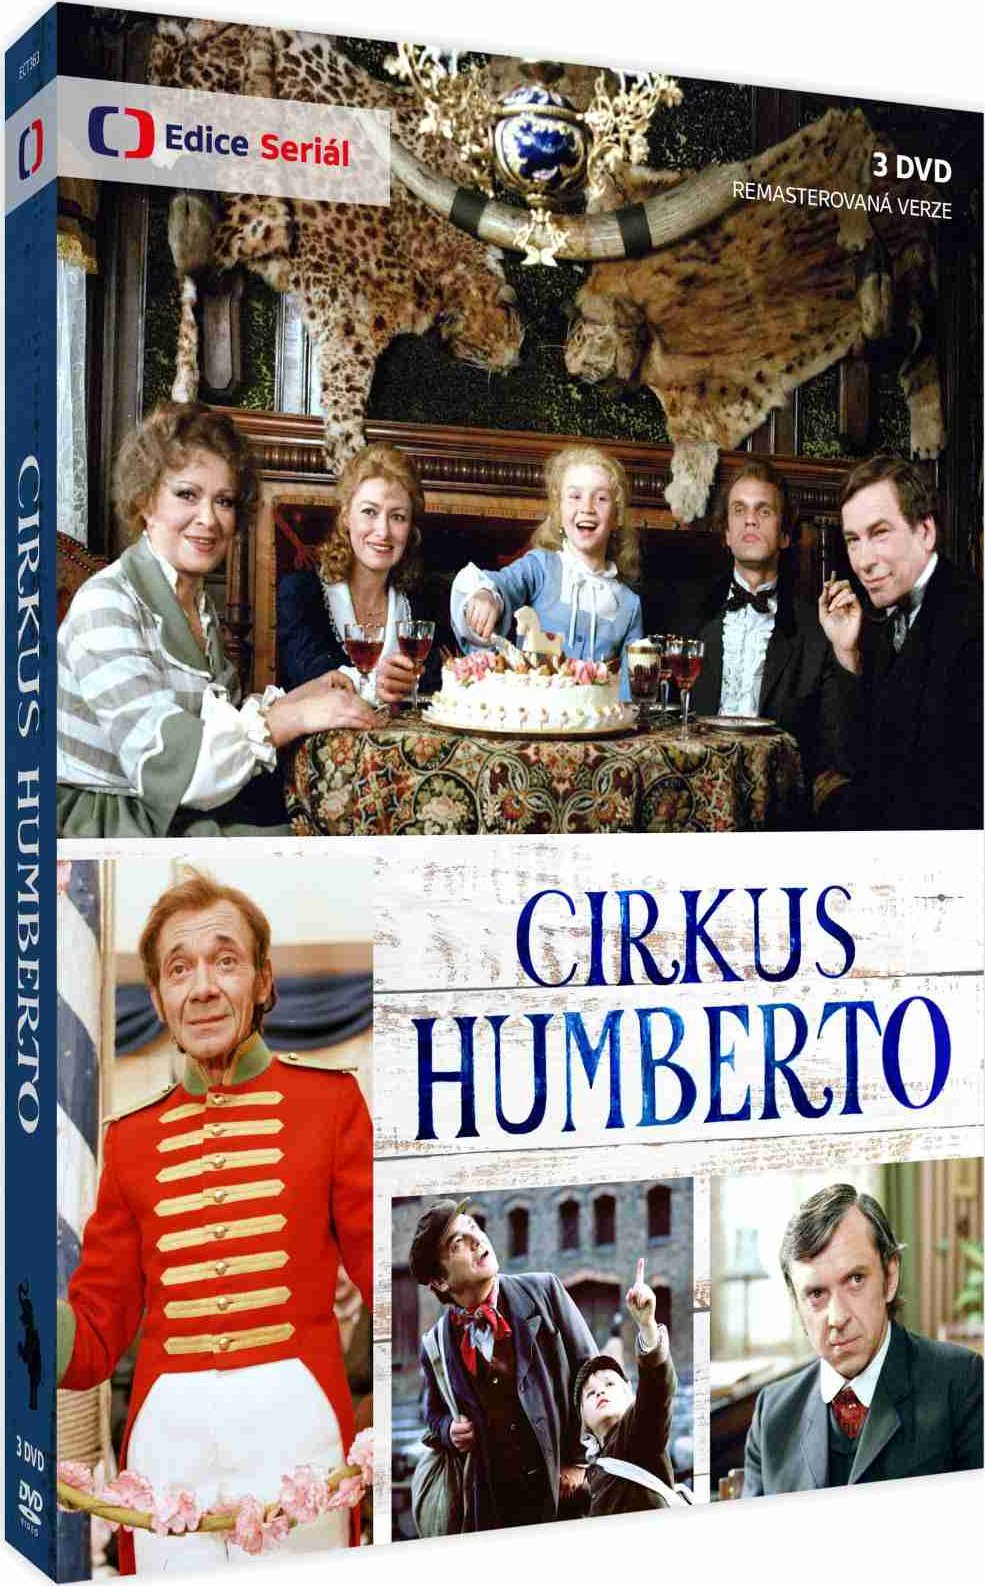 Circus Humberto / Cirkus Humberto Remastered DVD